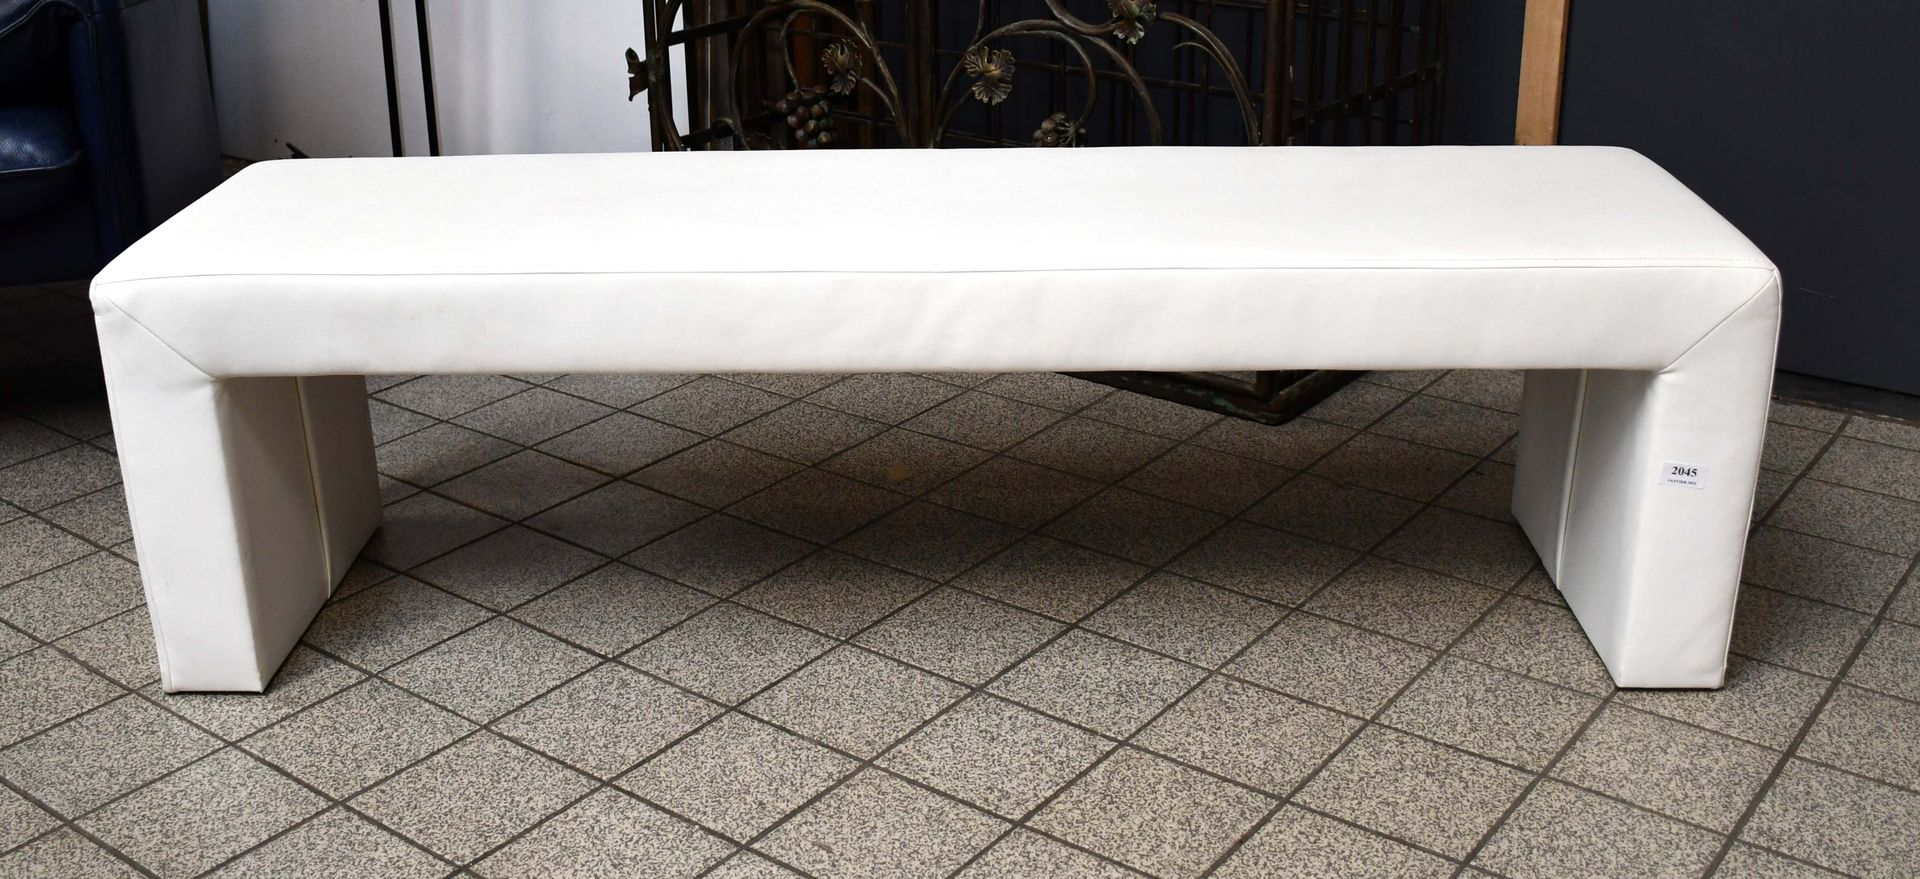 Null Bench in white skai

Length : 140 cm.